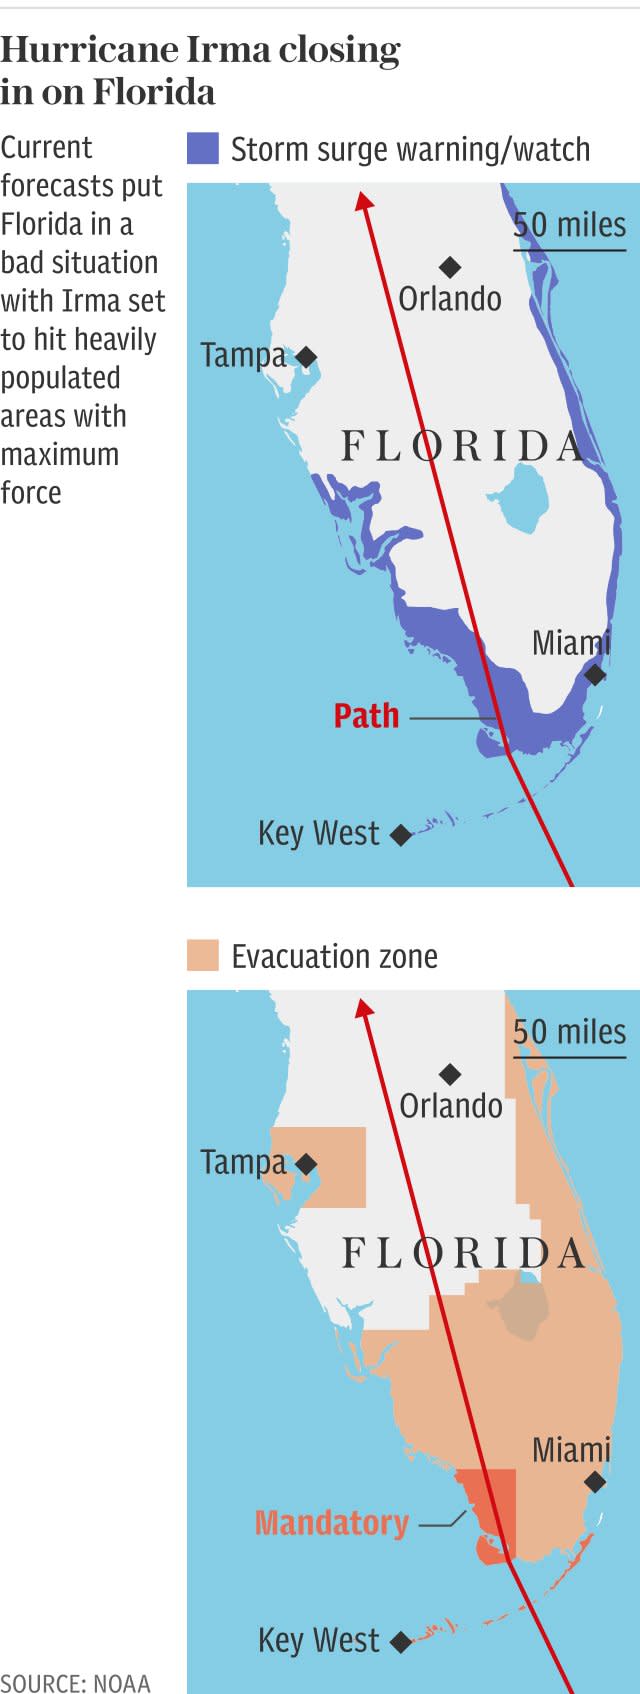 Hurricane Irma closing in on Florida